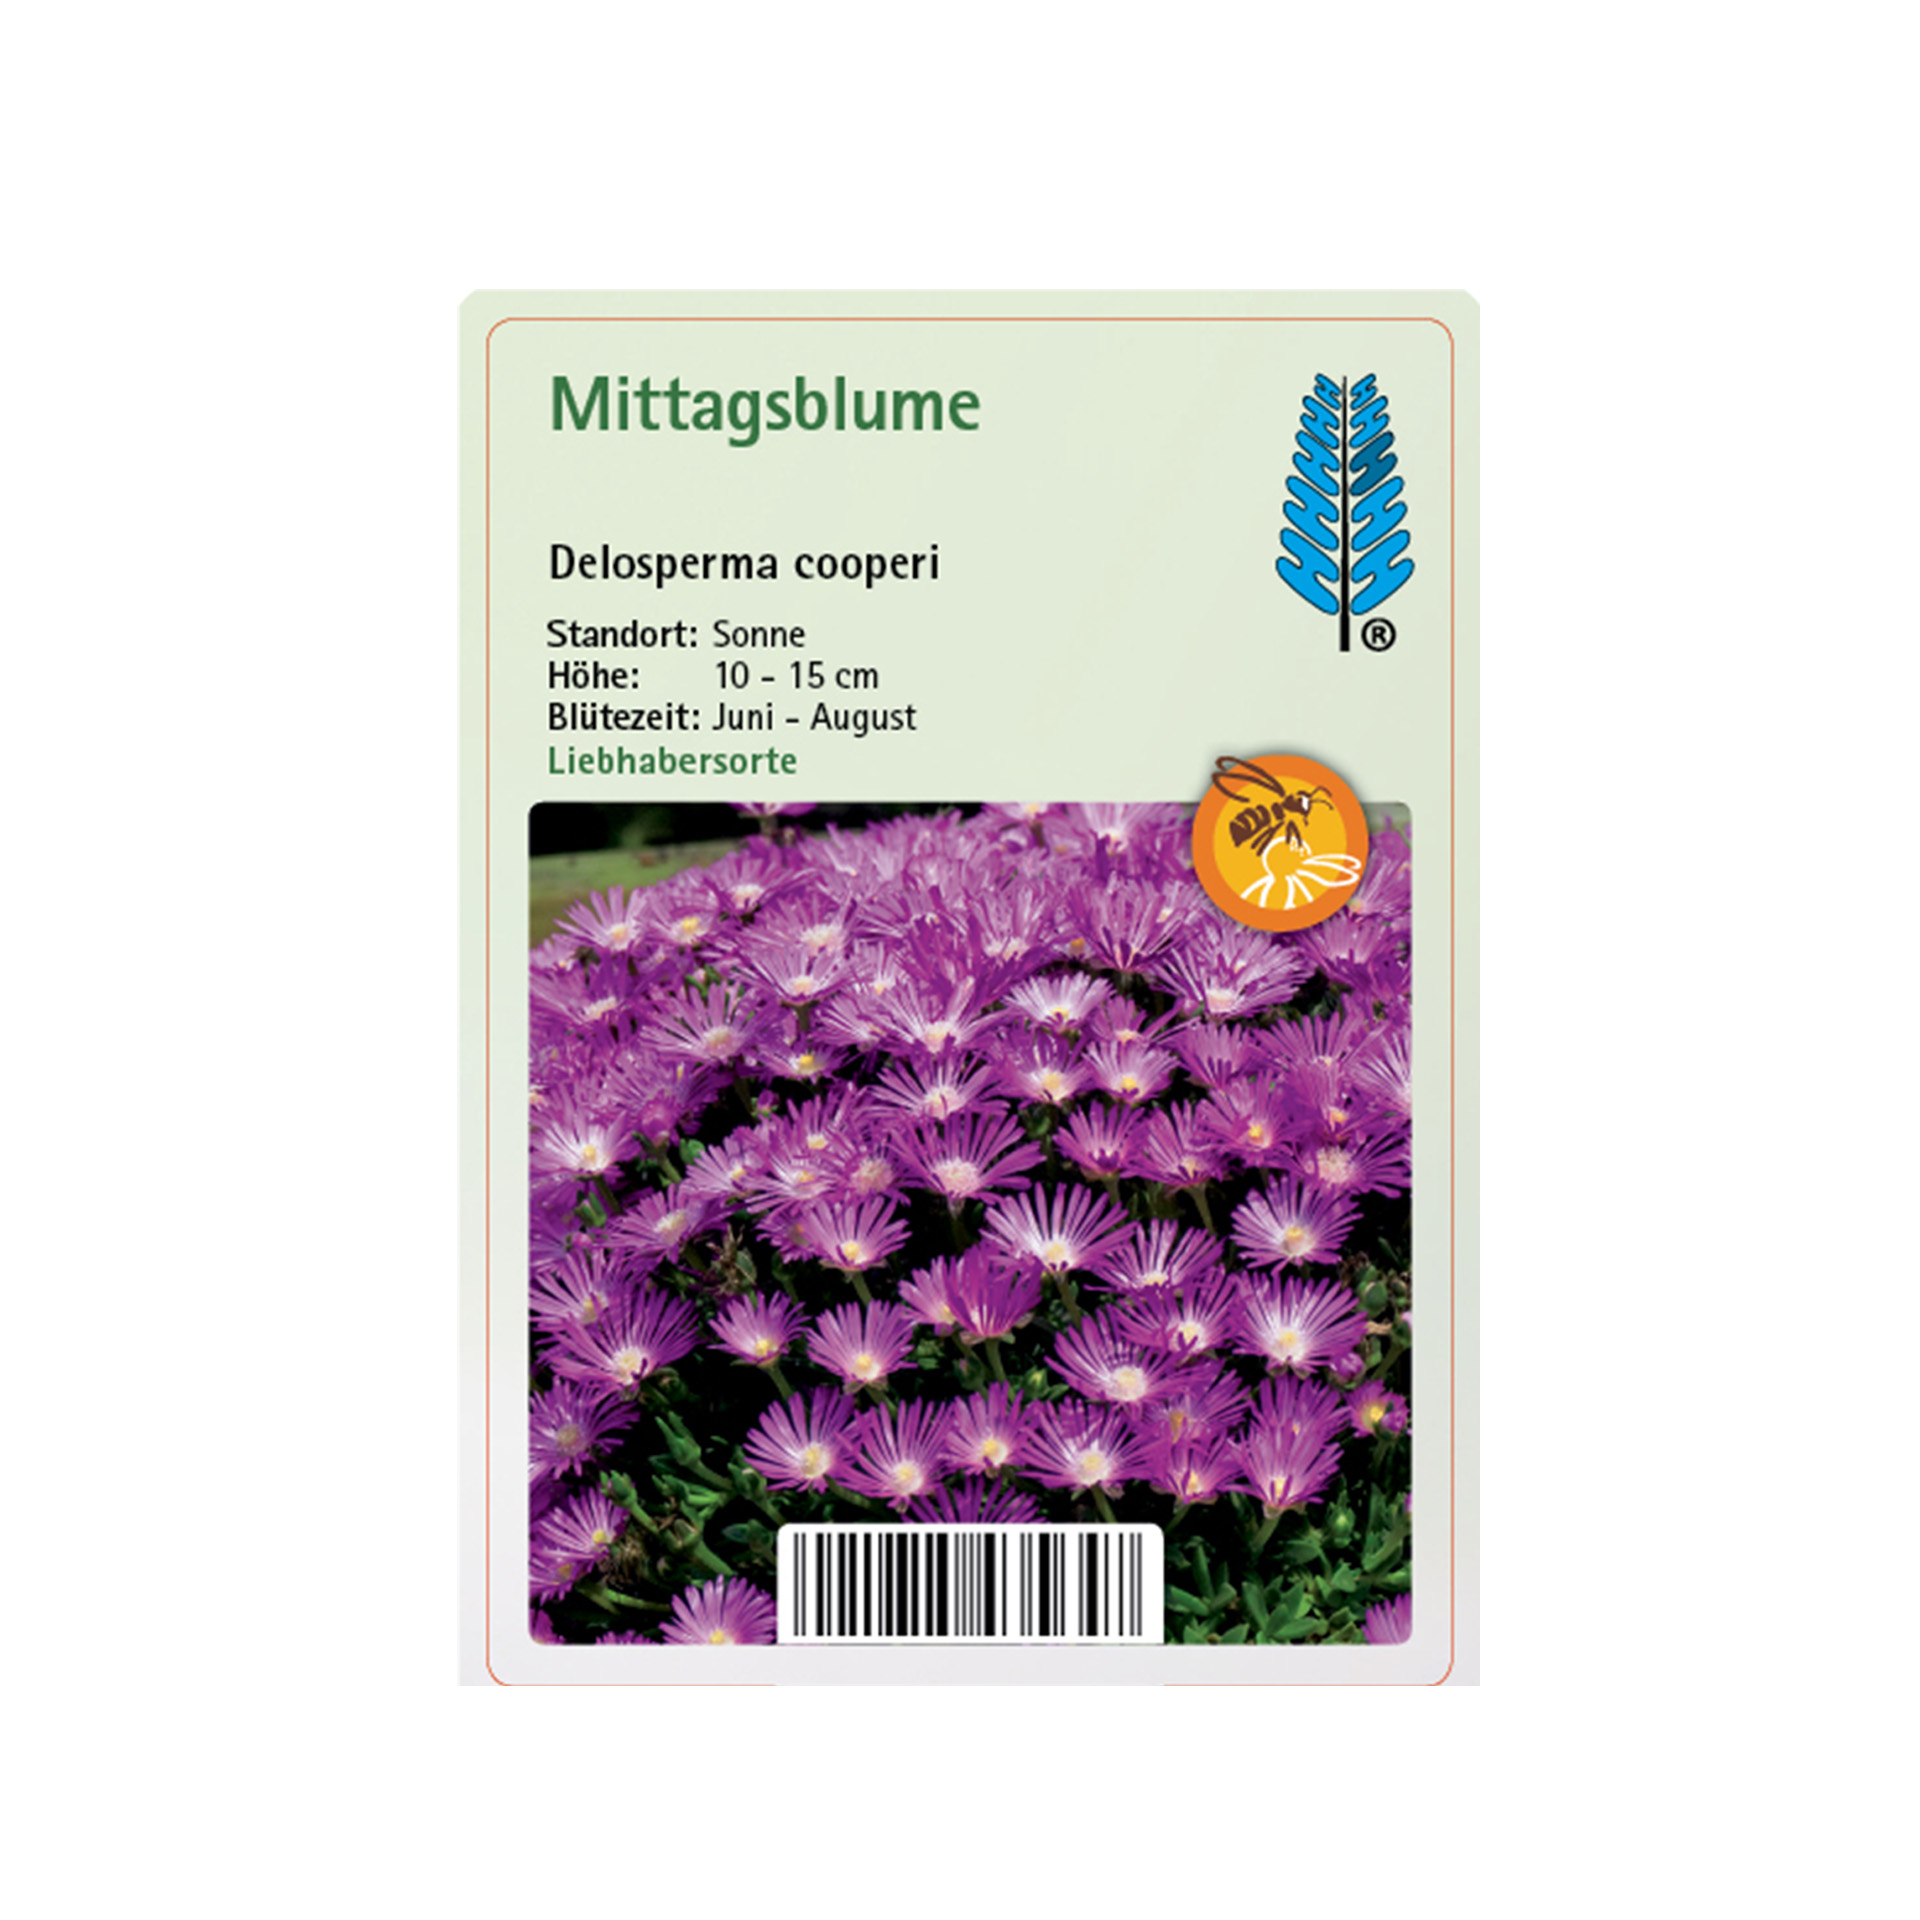 Mittagsblume - Delosperma cooperi, 9cm Topf